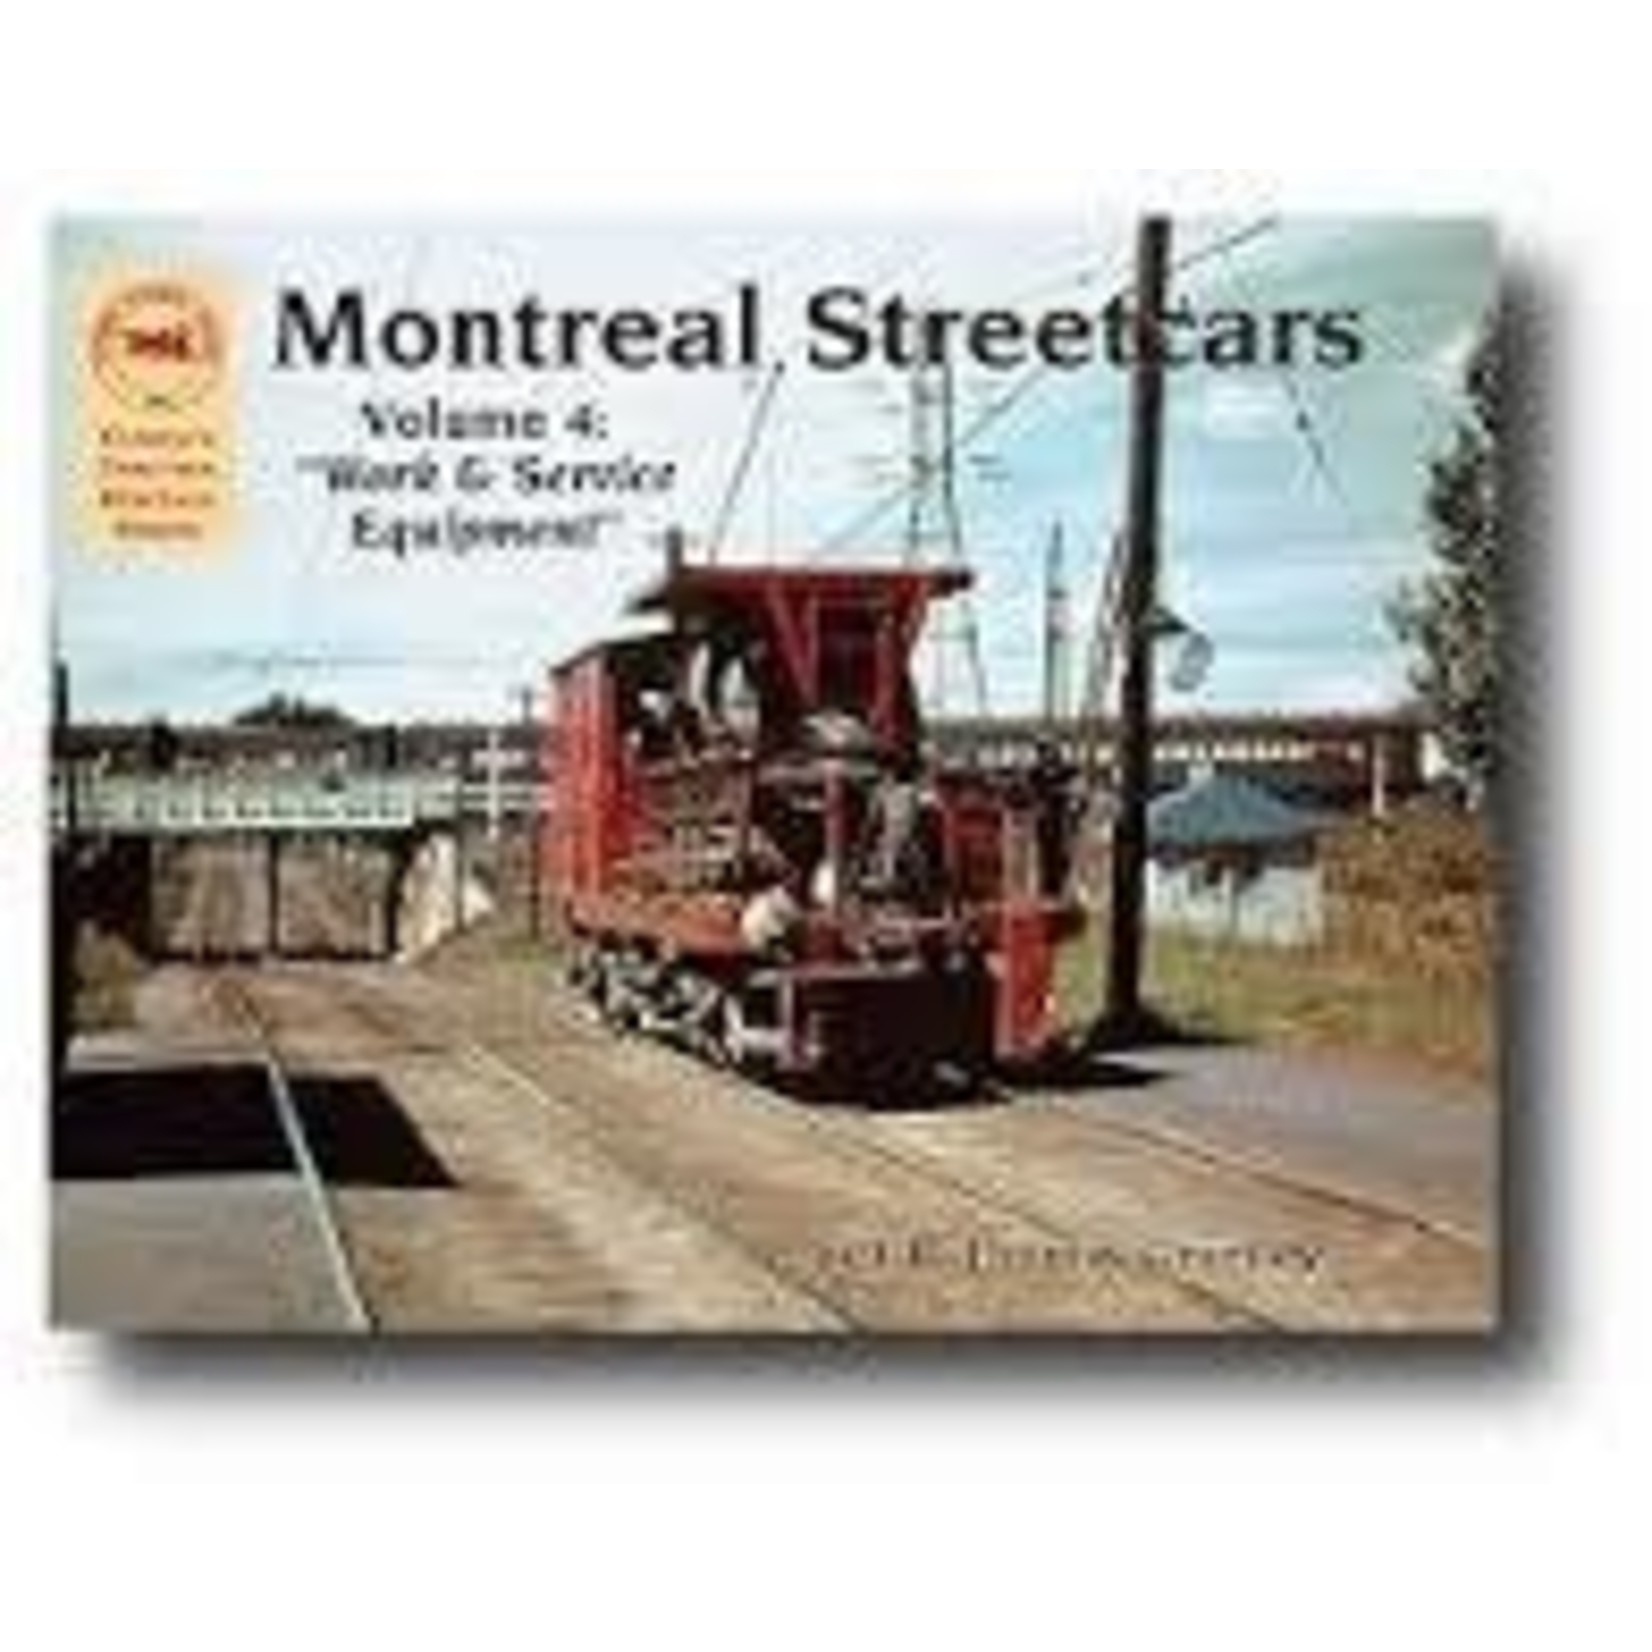 Montreal Streetcars Vol 4 Work & Service Equipment